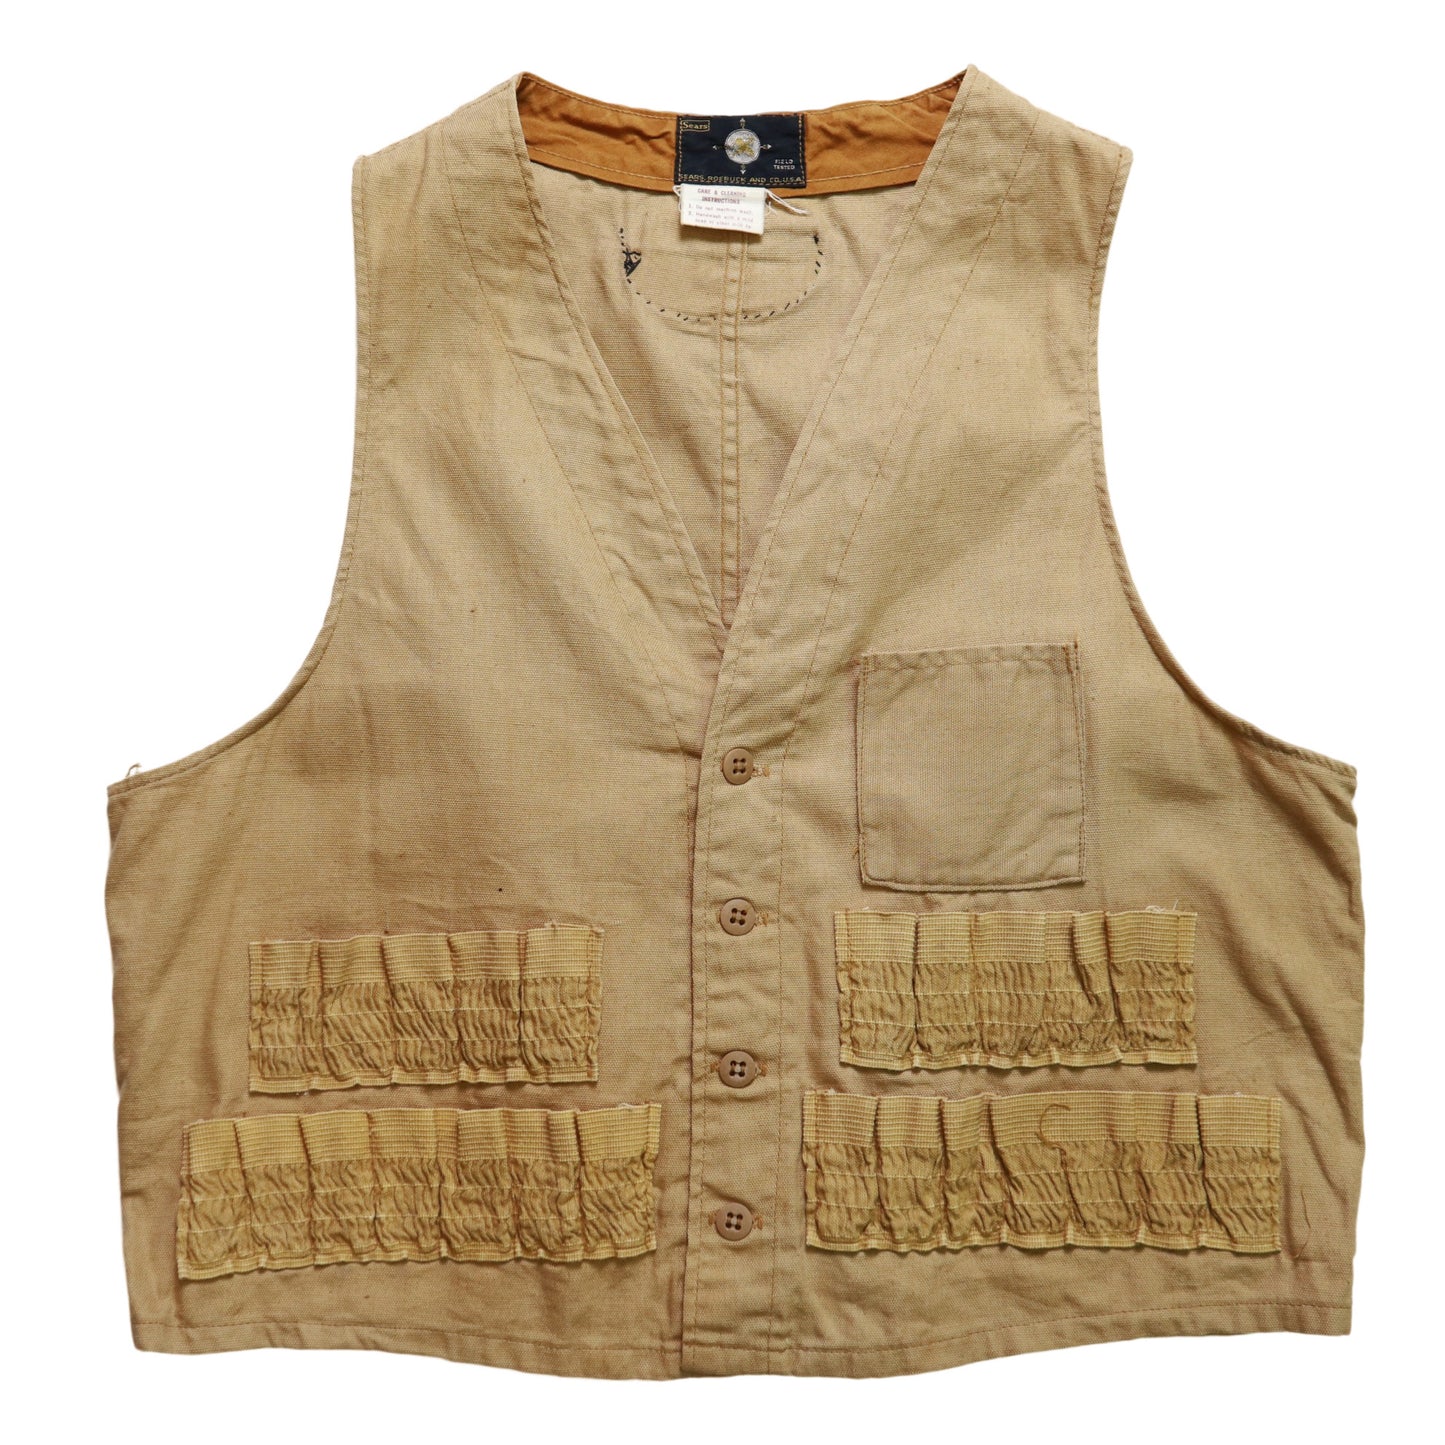 60-70s Sears hunting vest 狩獵背心